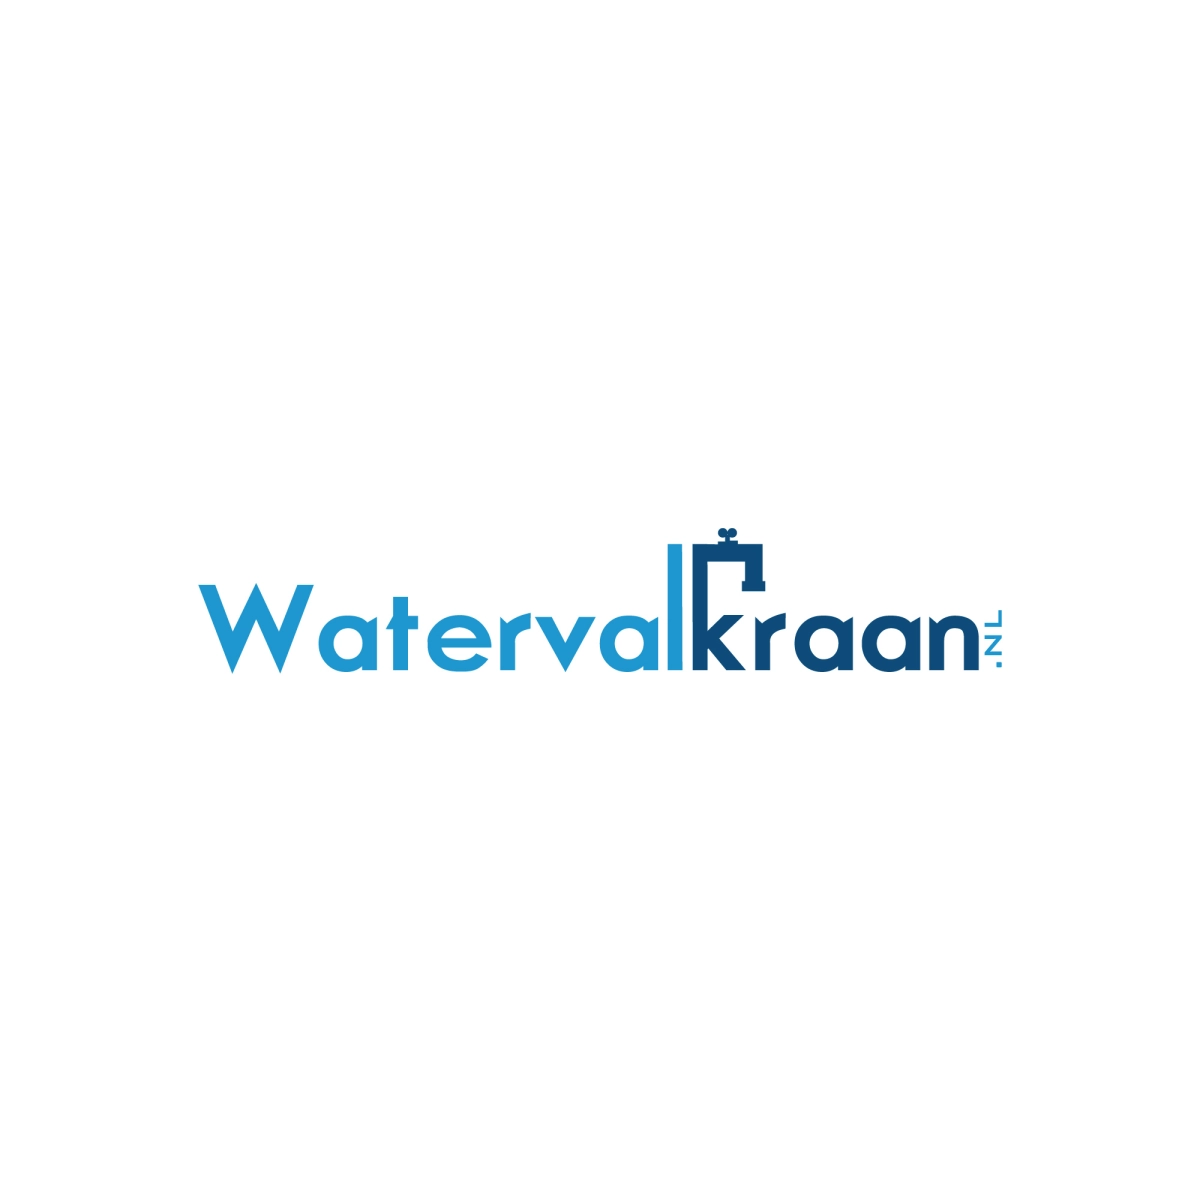 Watervalkraan.nls achtergrond